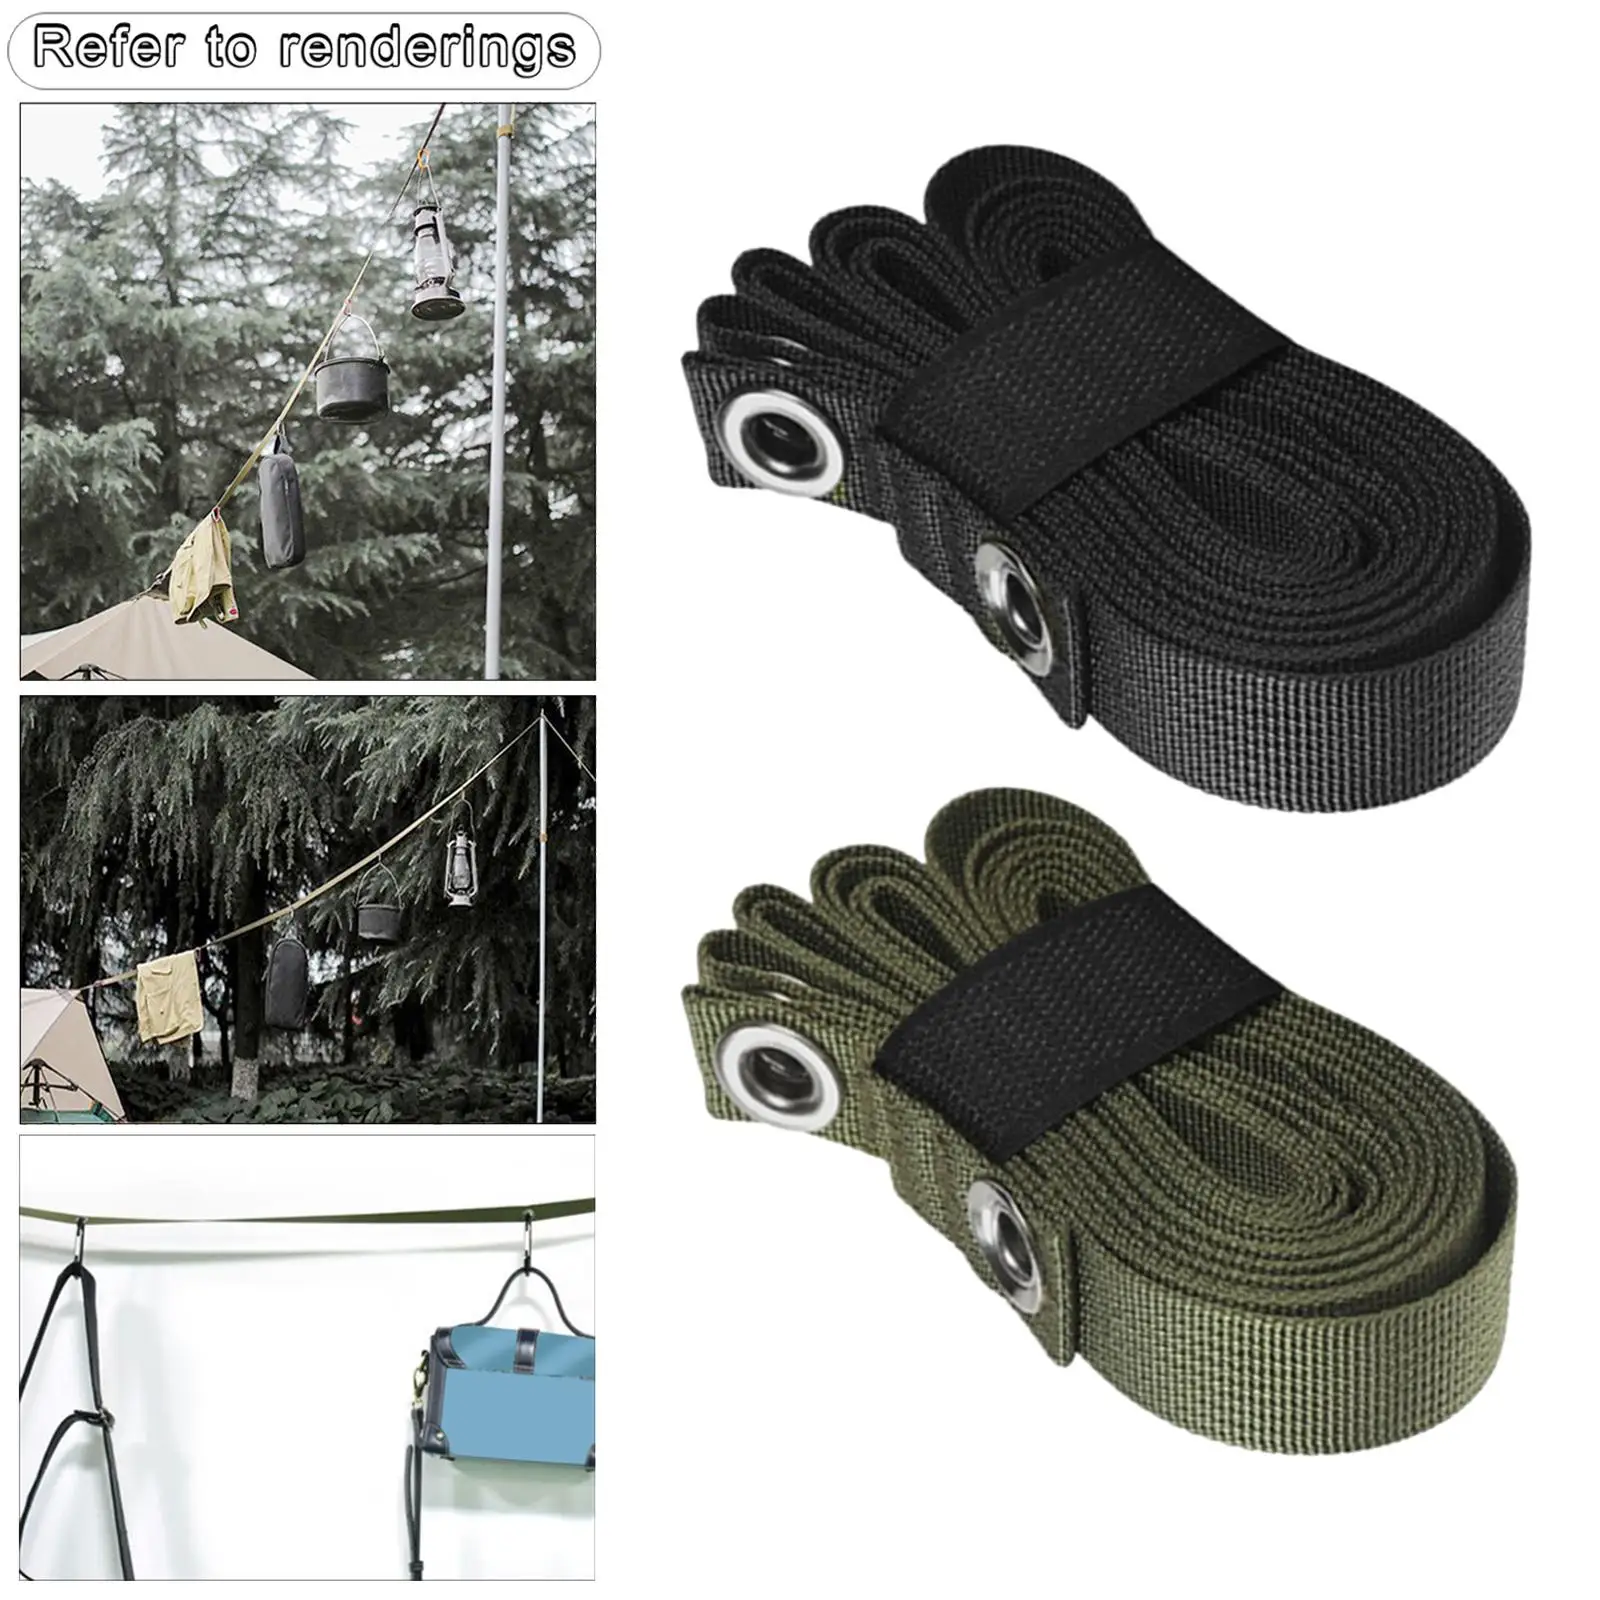 Camping Lanyard Organizer Camping Accessories Hanging Rope Extension Belt